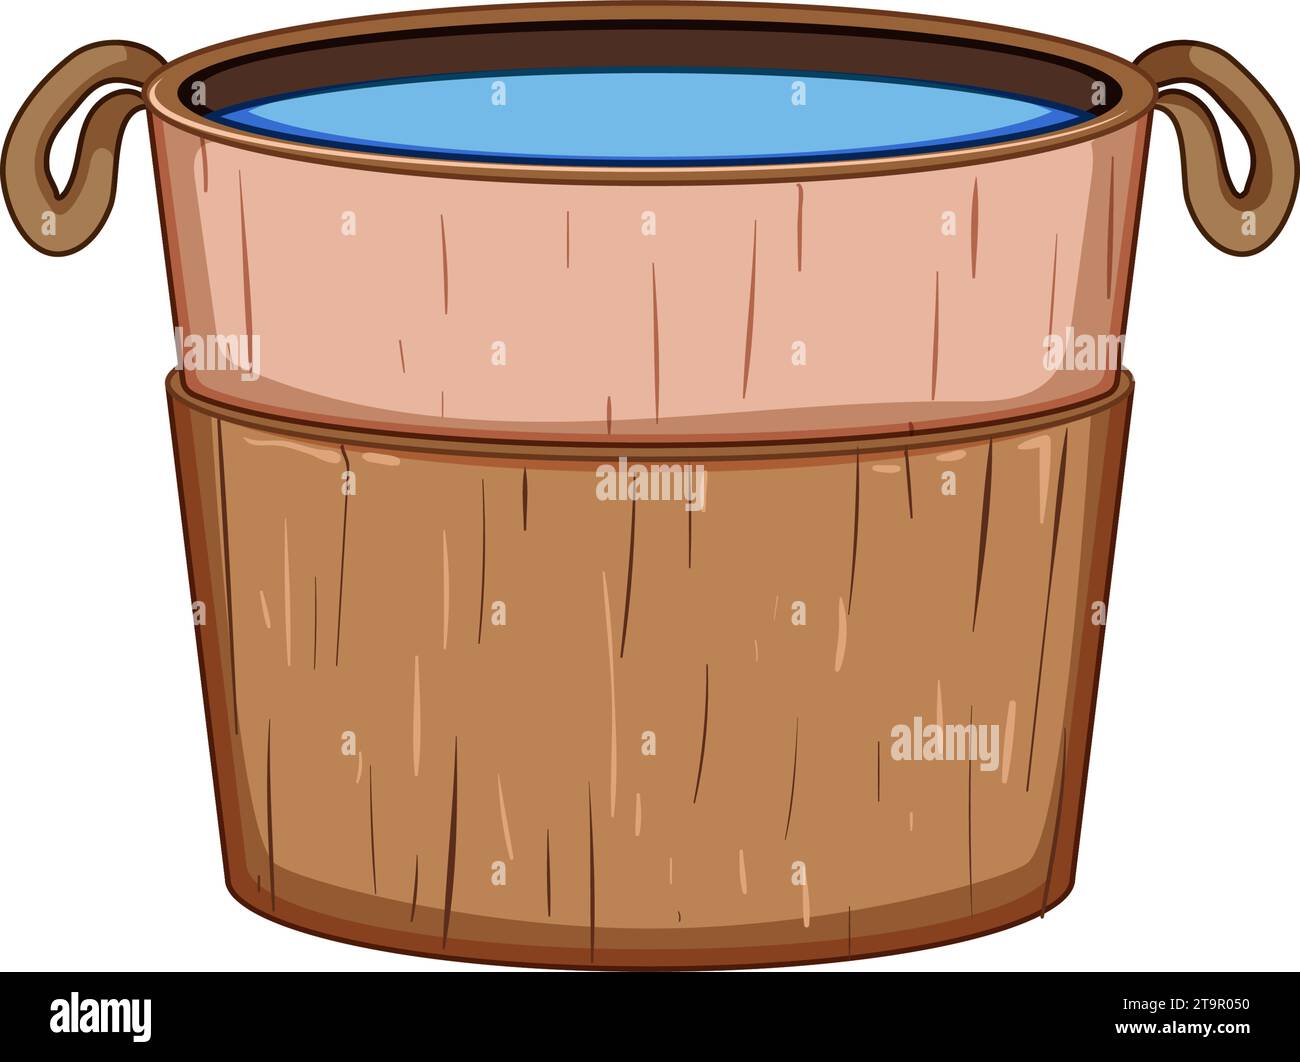 container wooden tub cartoon vector illustration Stock Vector